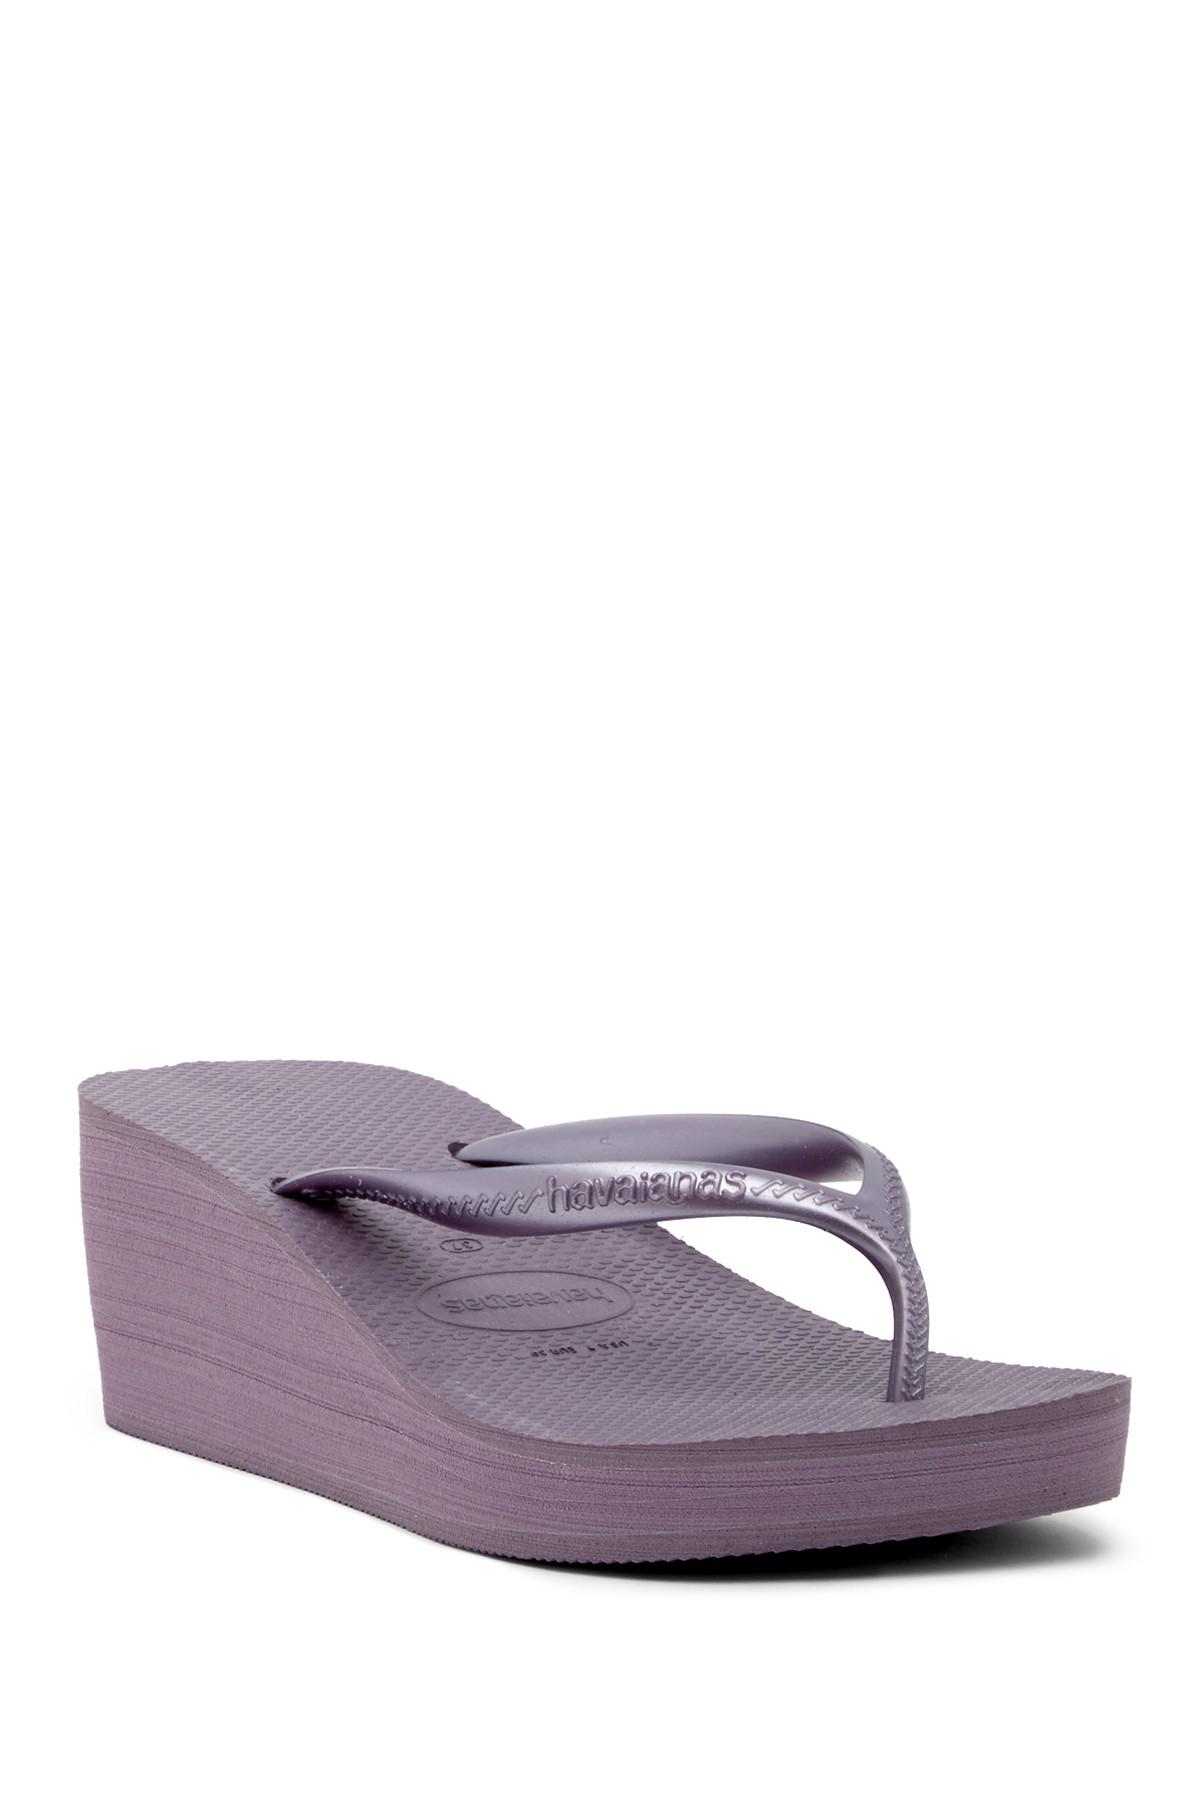 Havaianas High Fashion Platform Wedge Flip Flop Sandal (women) in Purple |  Lyst